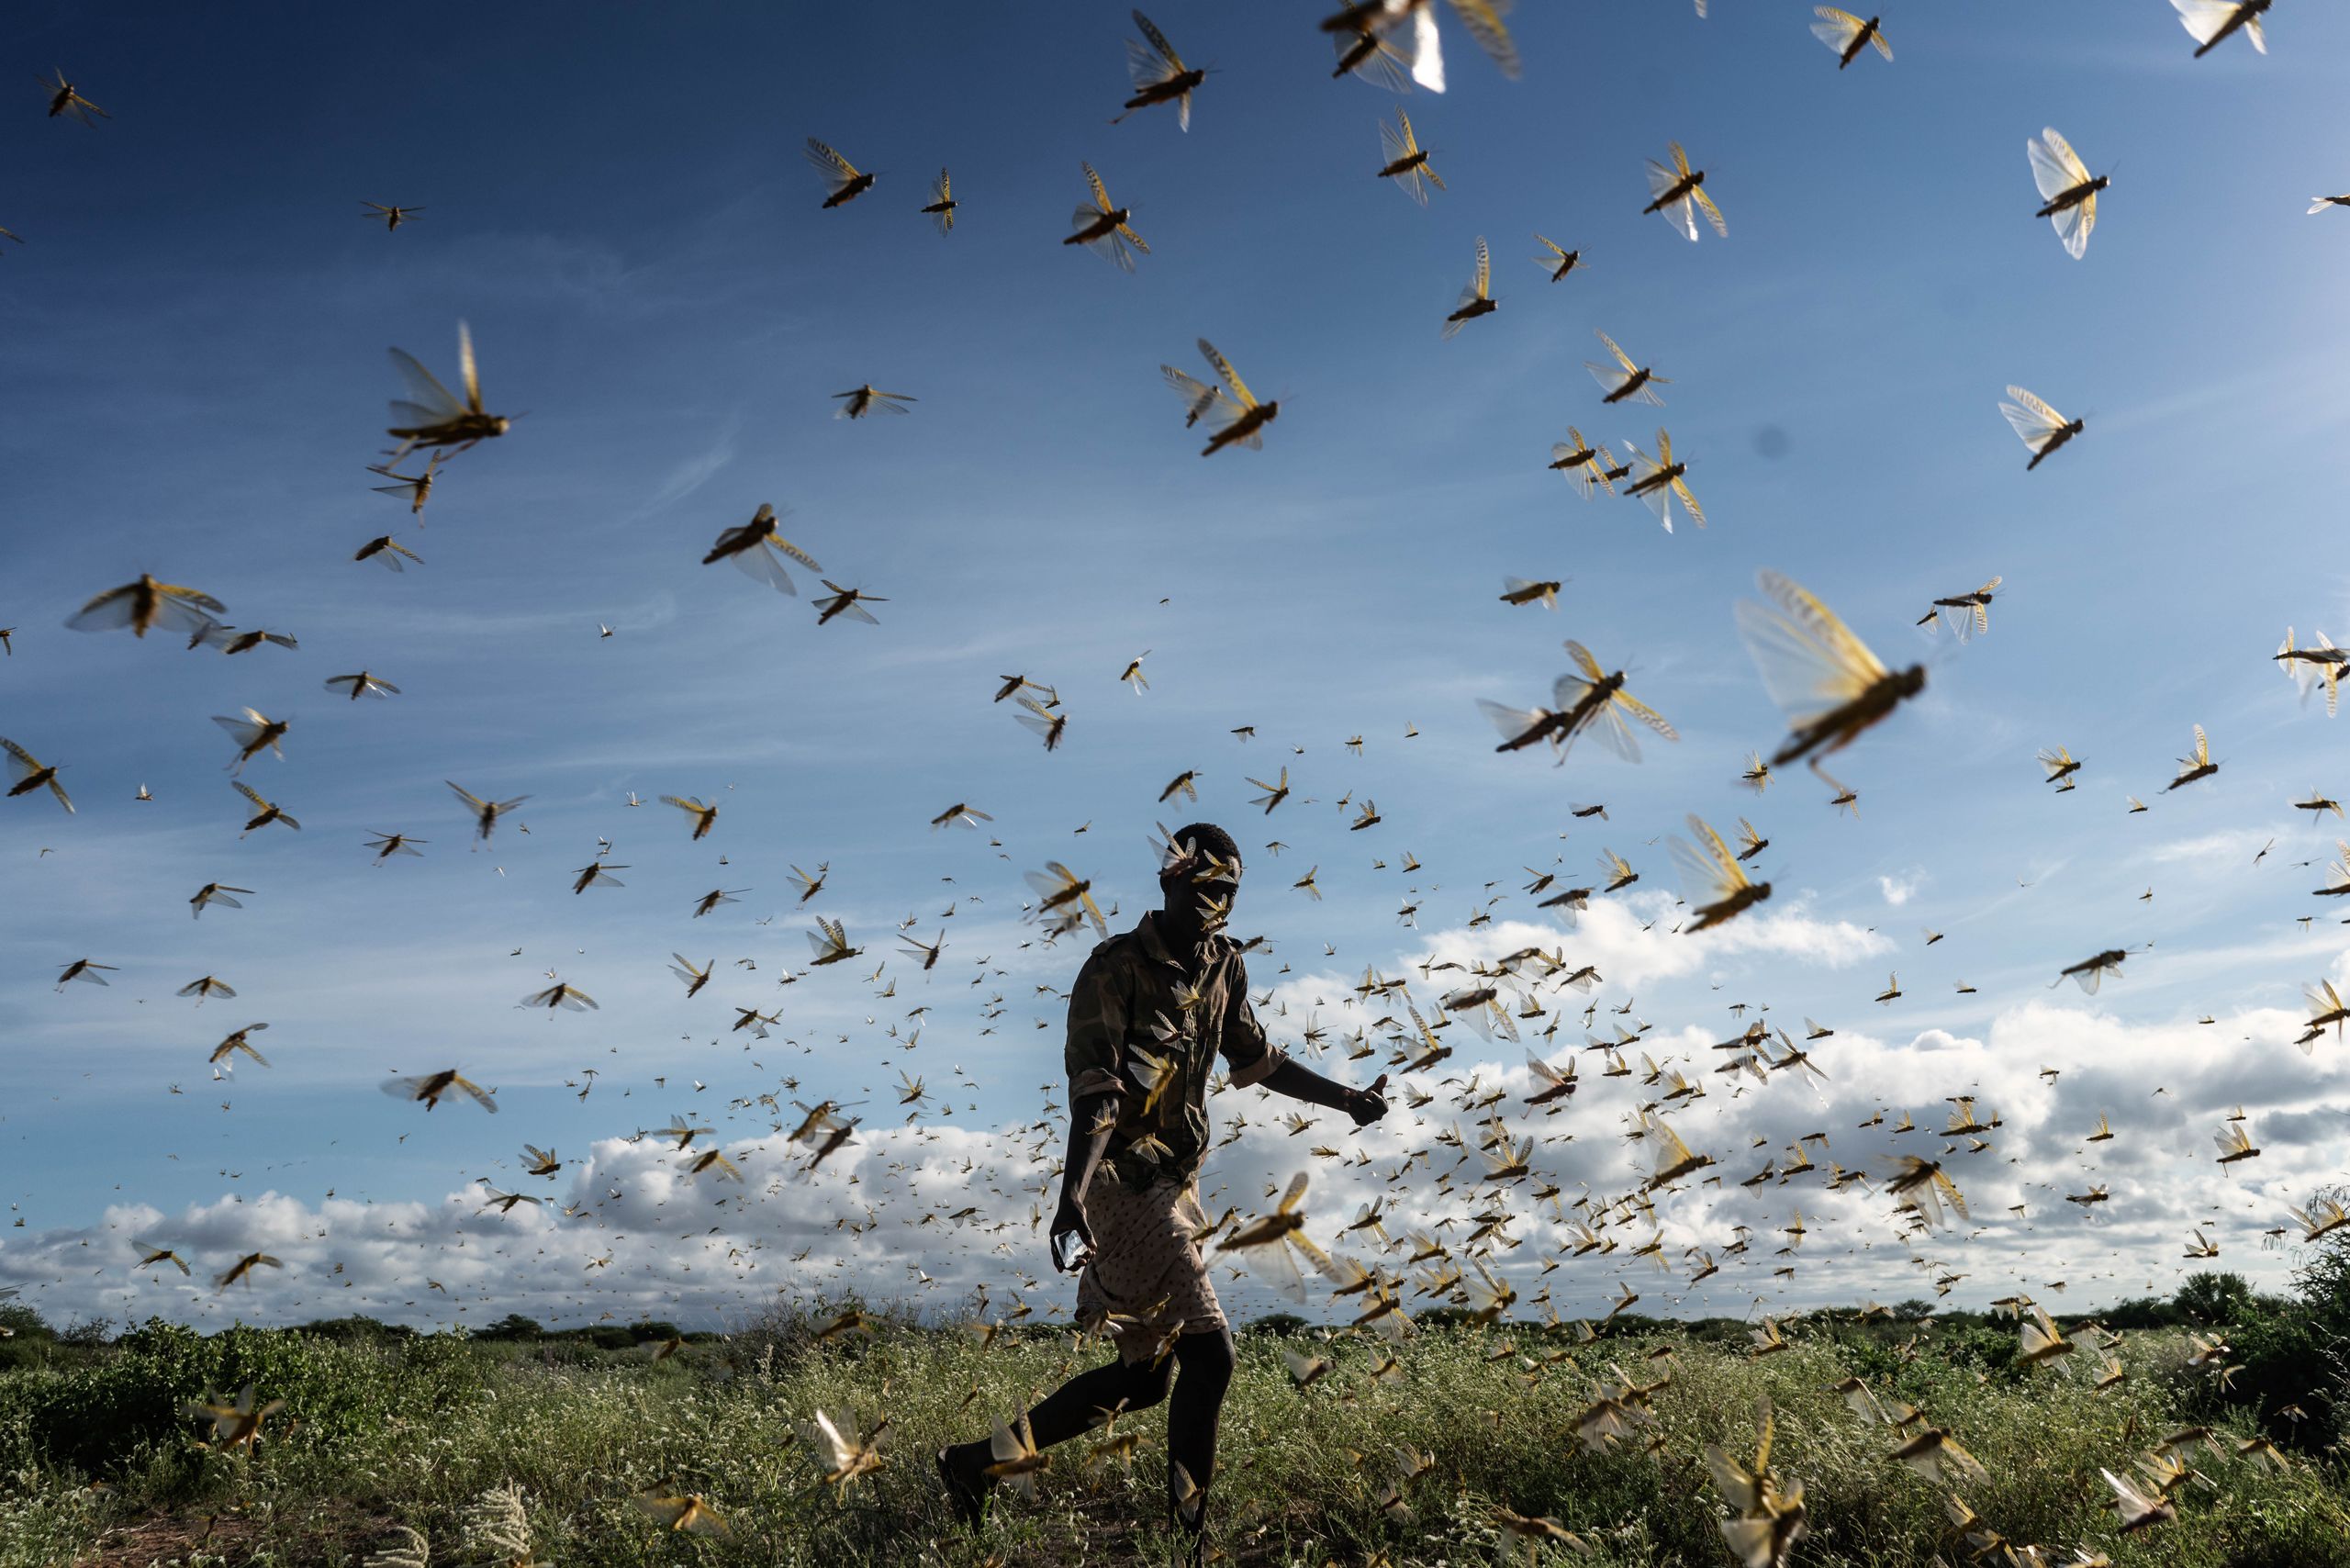 A man chasing away a swarm of desert locusts